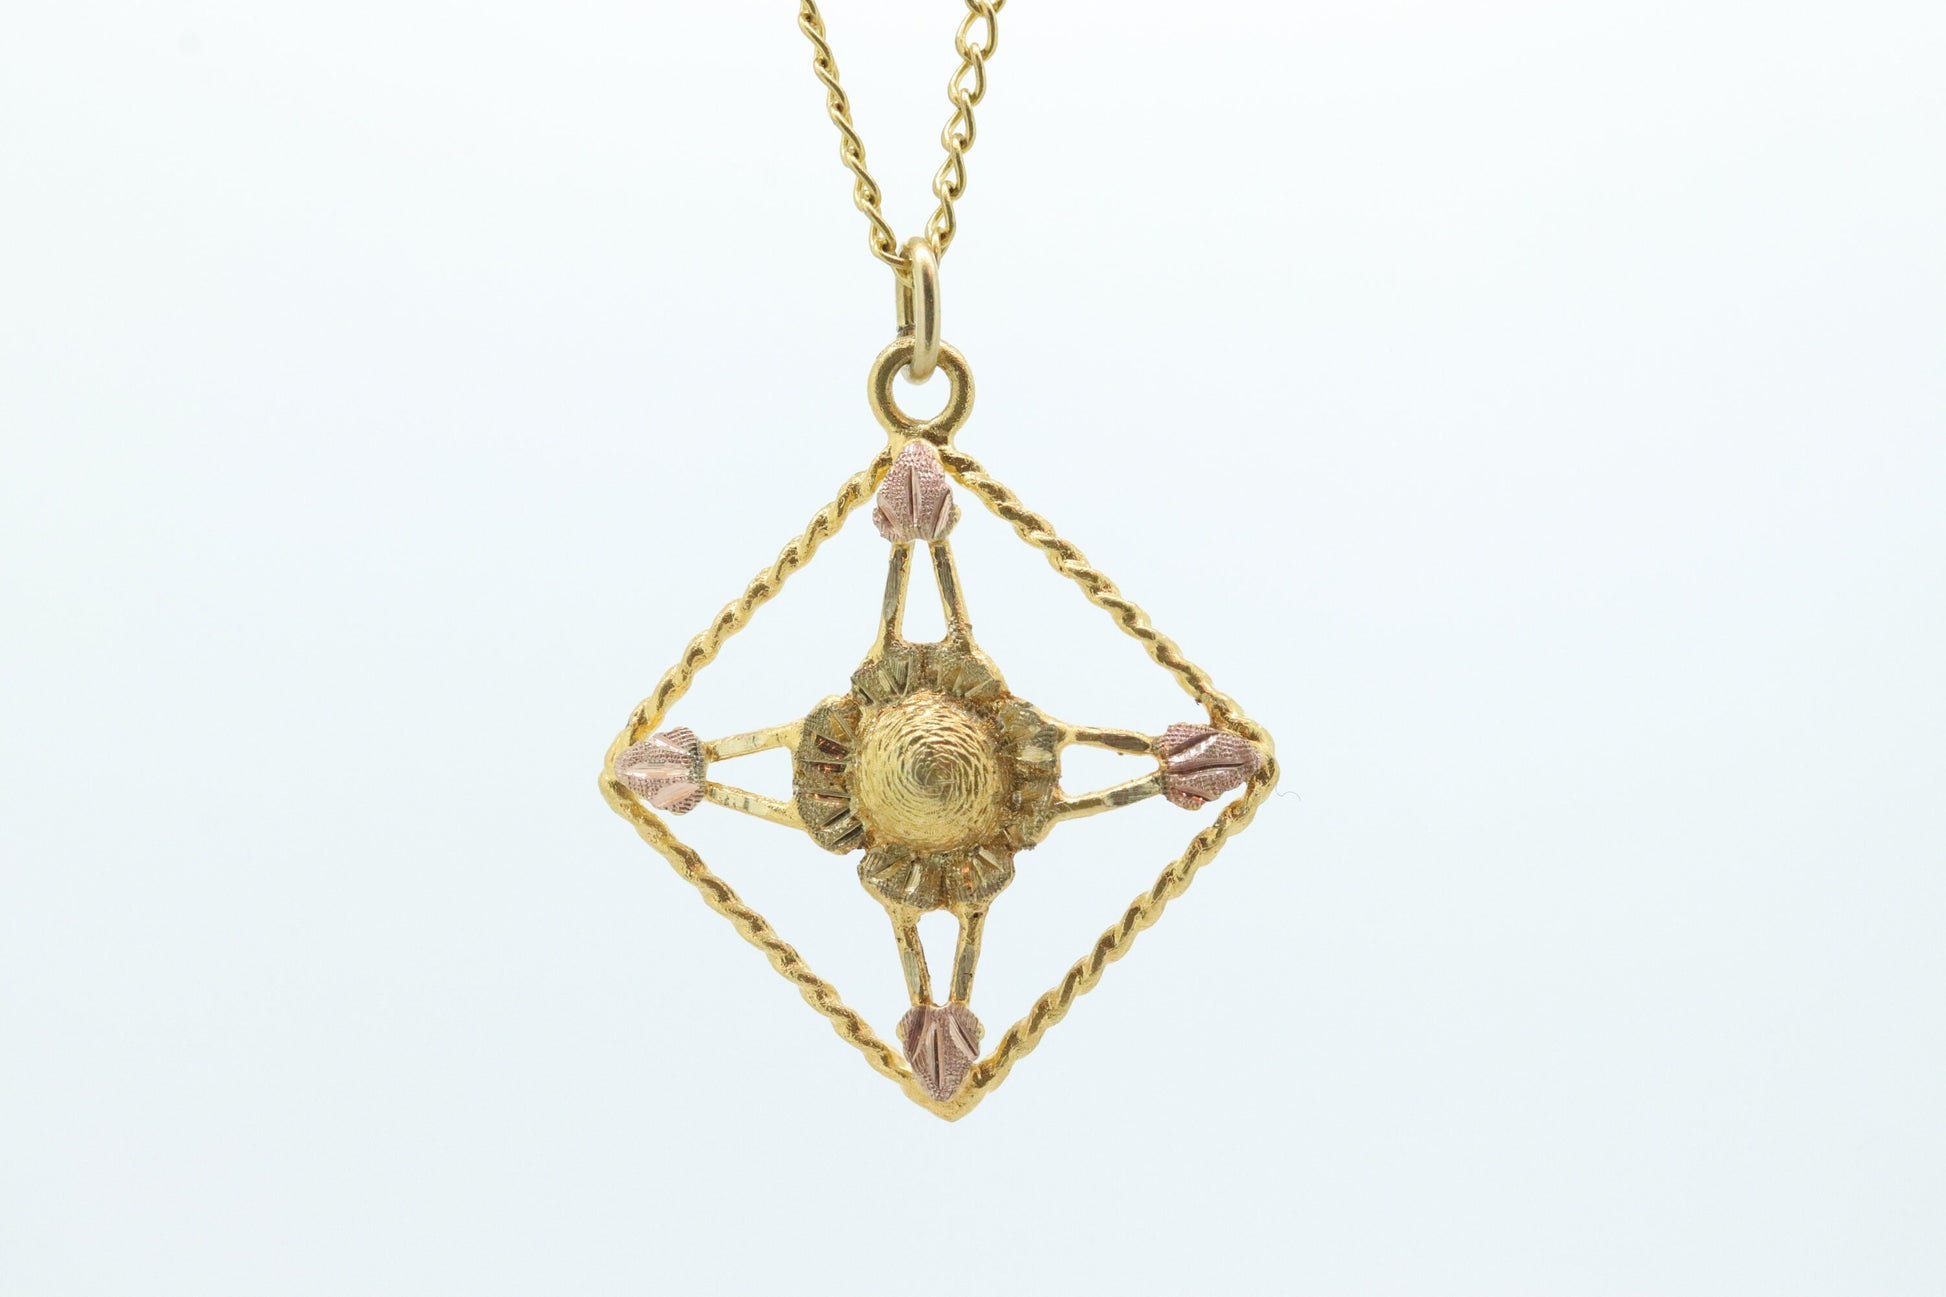 Black Hills Gold Sun Flower Pendant. Vintage 10k Pendant Charm made by Black Hills Gold. st(60/38)